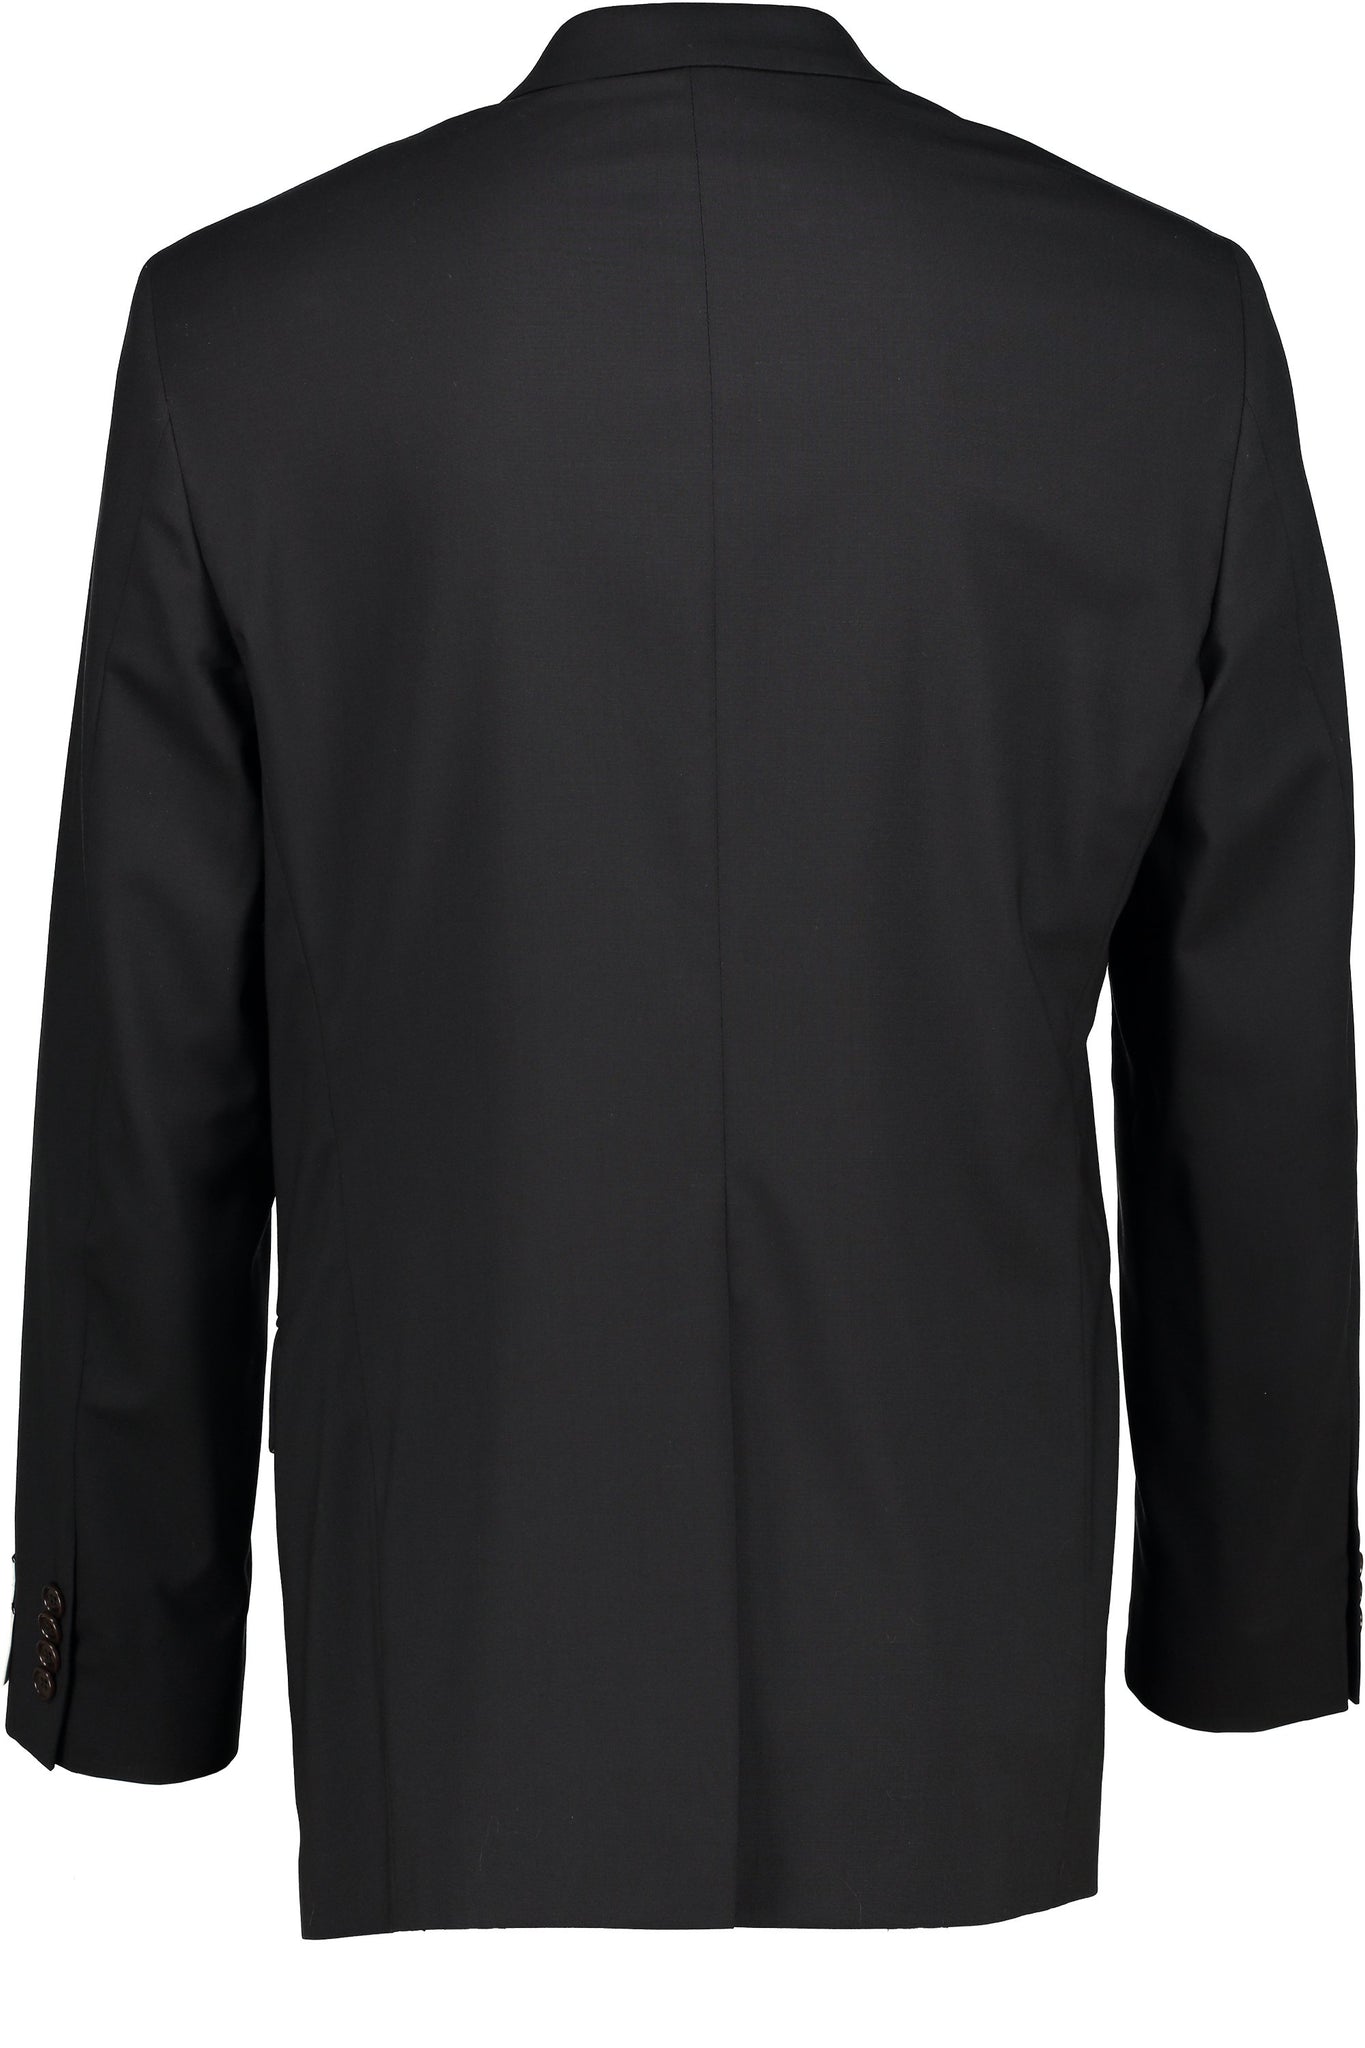 Classic Fit Black H-Tech Wool Suit Separate Jacket -  Hardwick.com